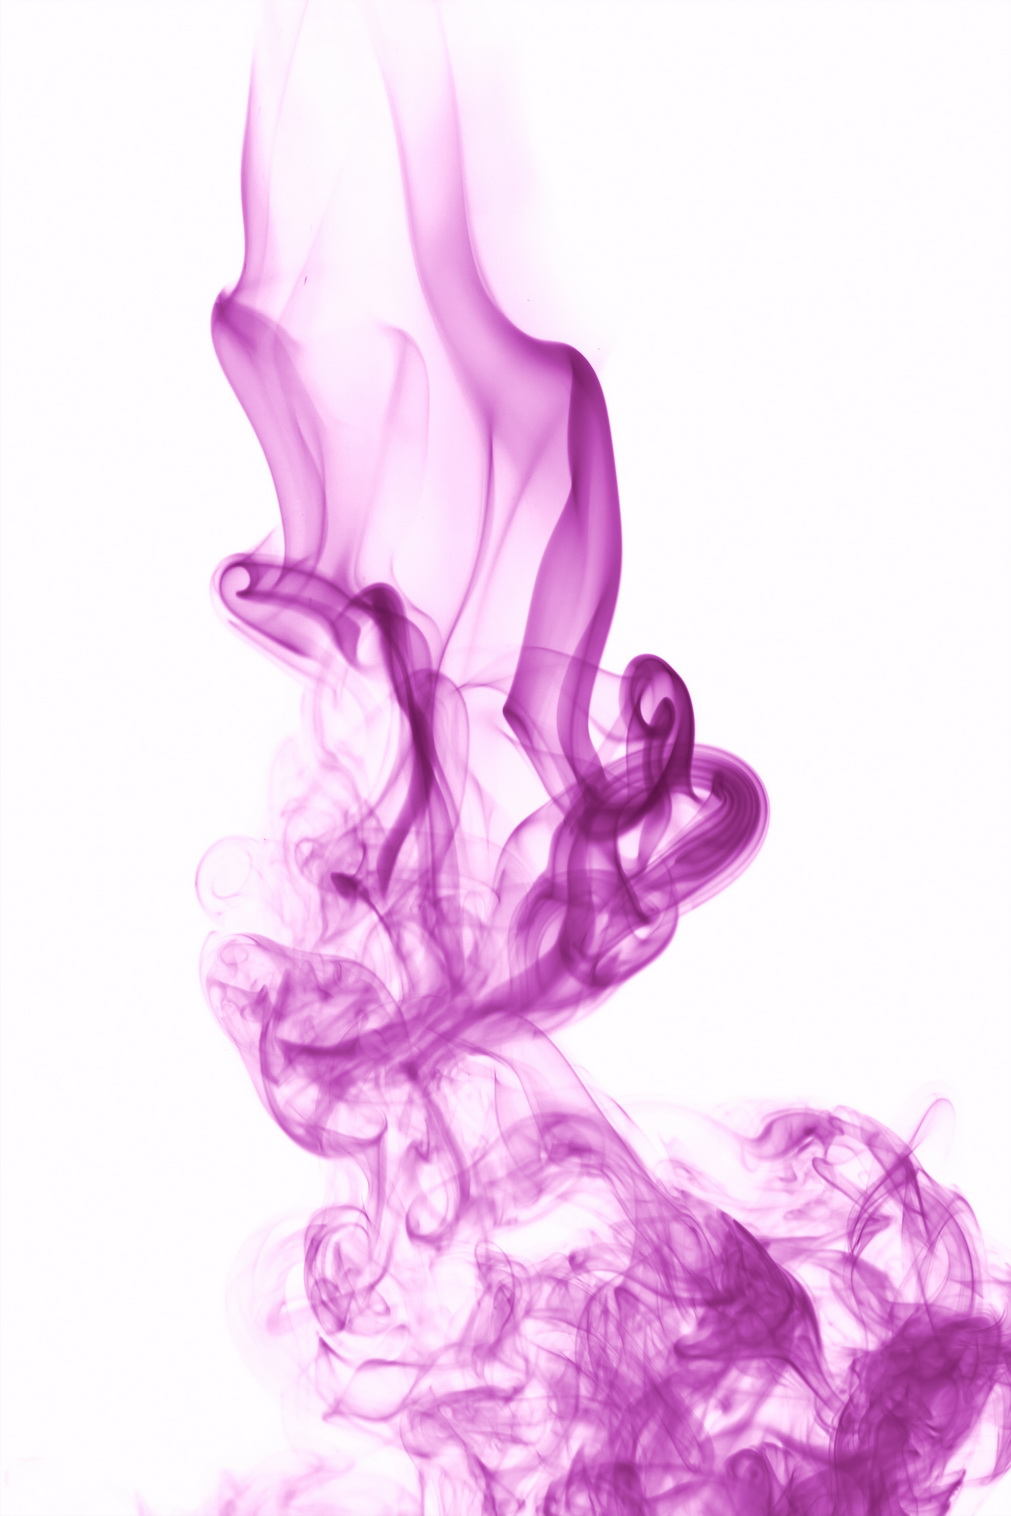 Violet smoke photo